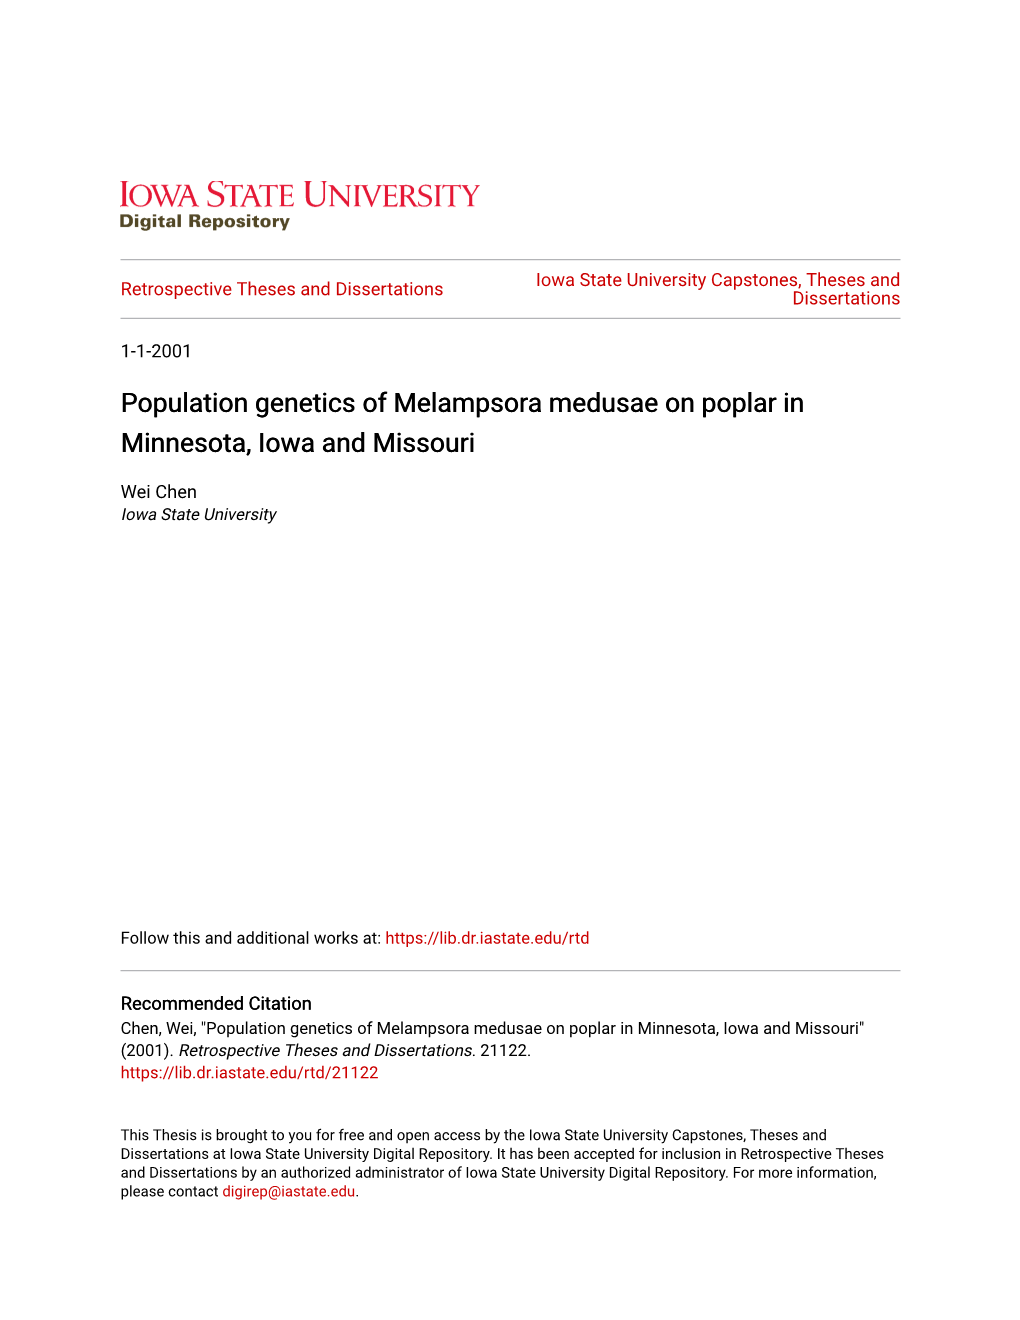 Population Genetics of Melampsora Medusae on Poplar in Minnesota, Iowa and Missouri